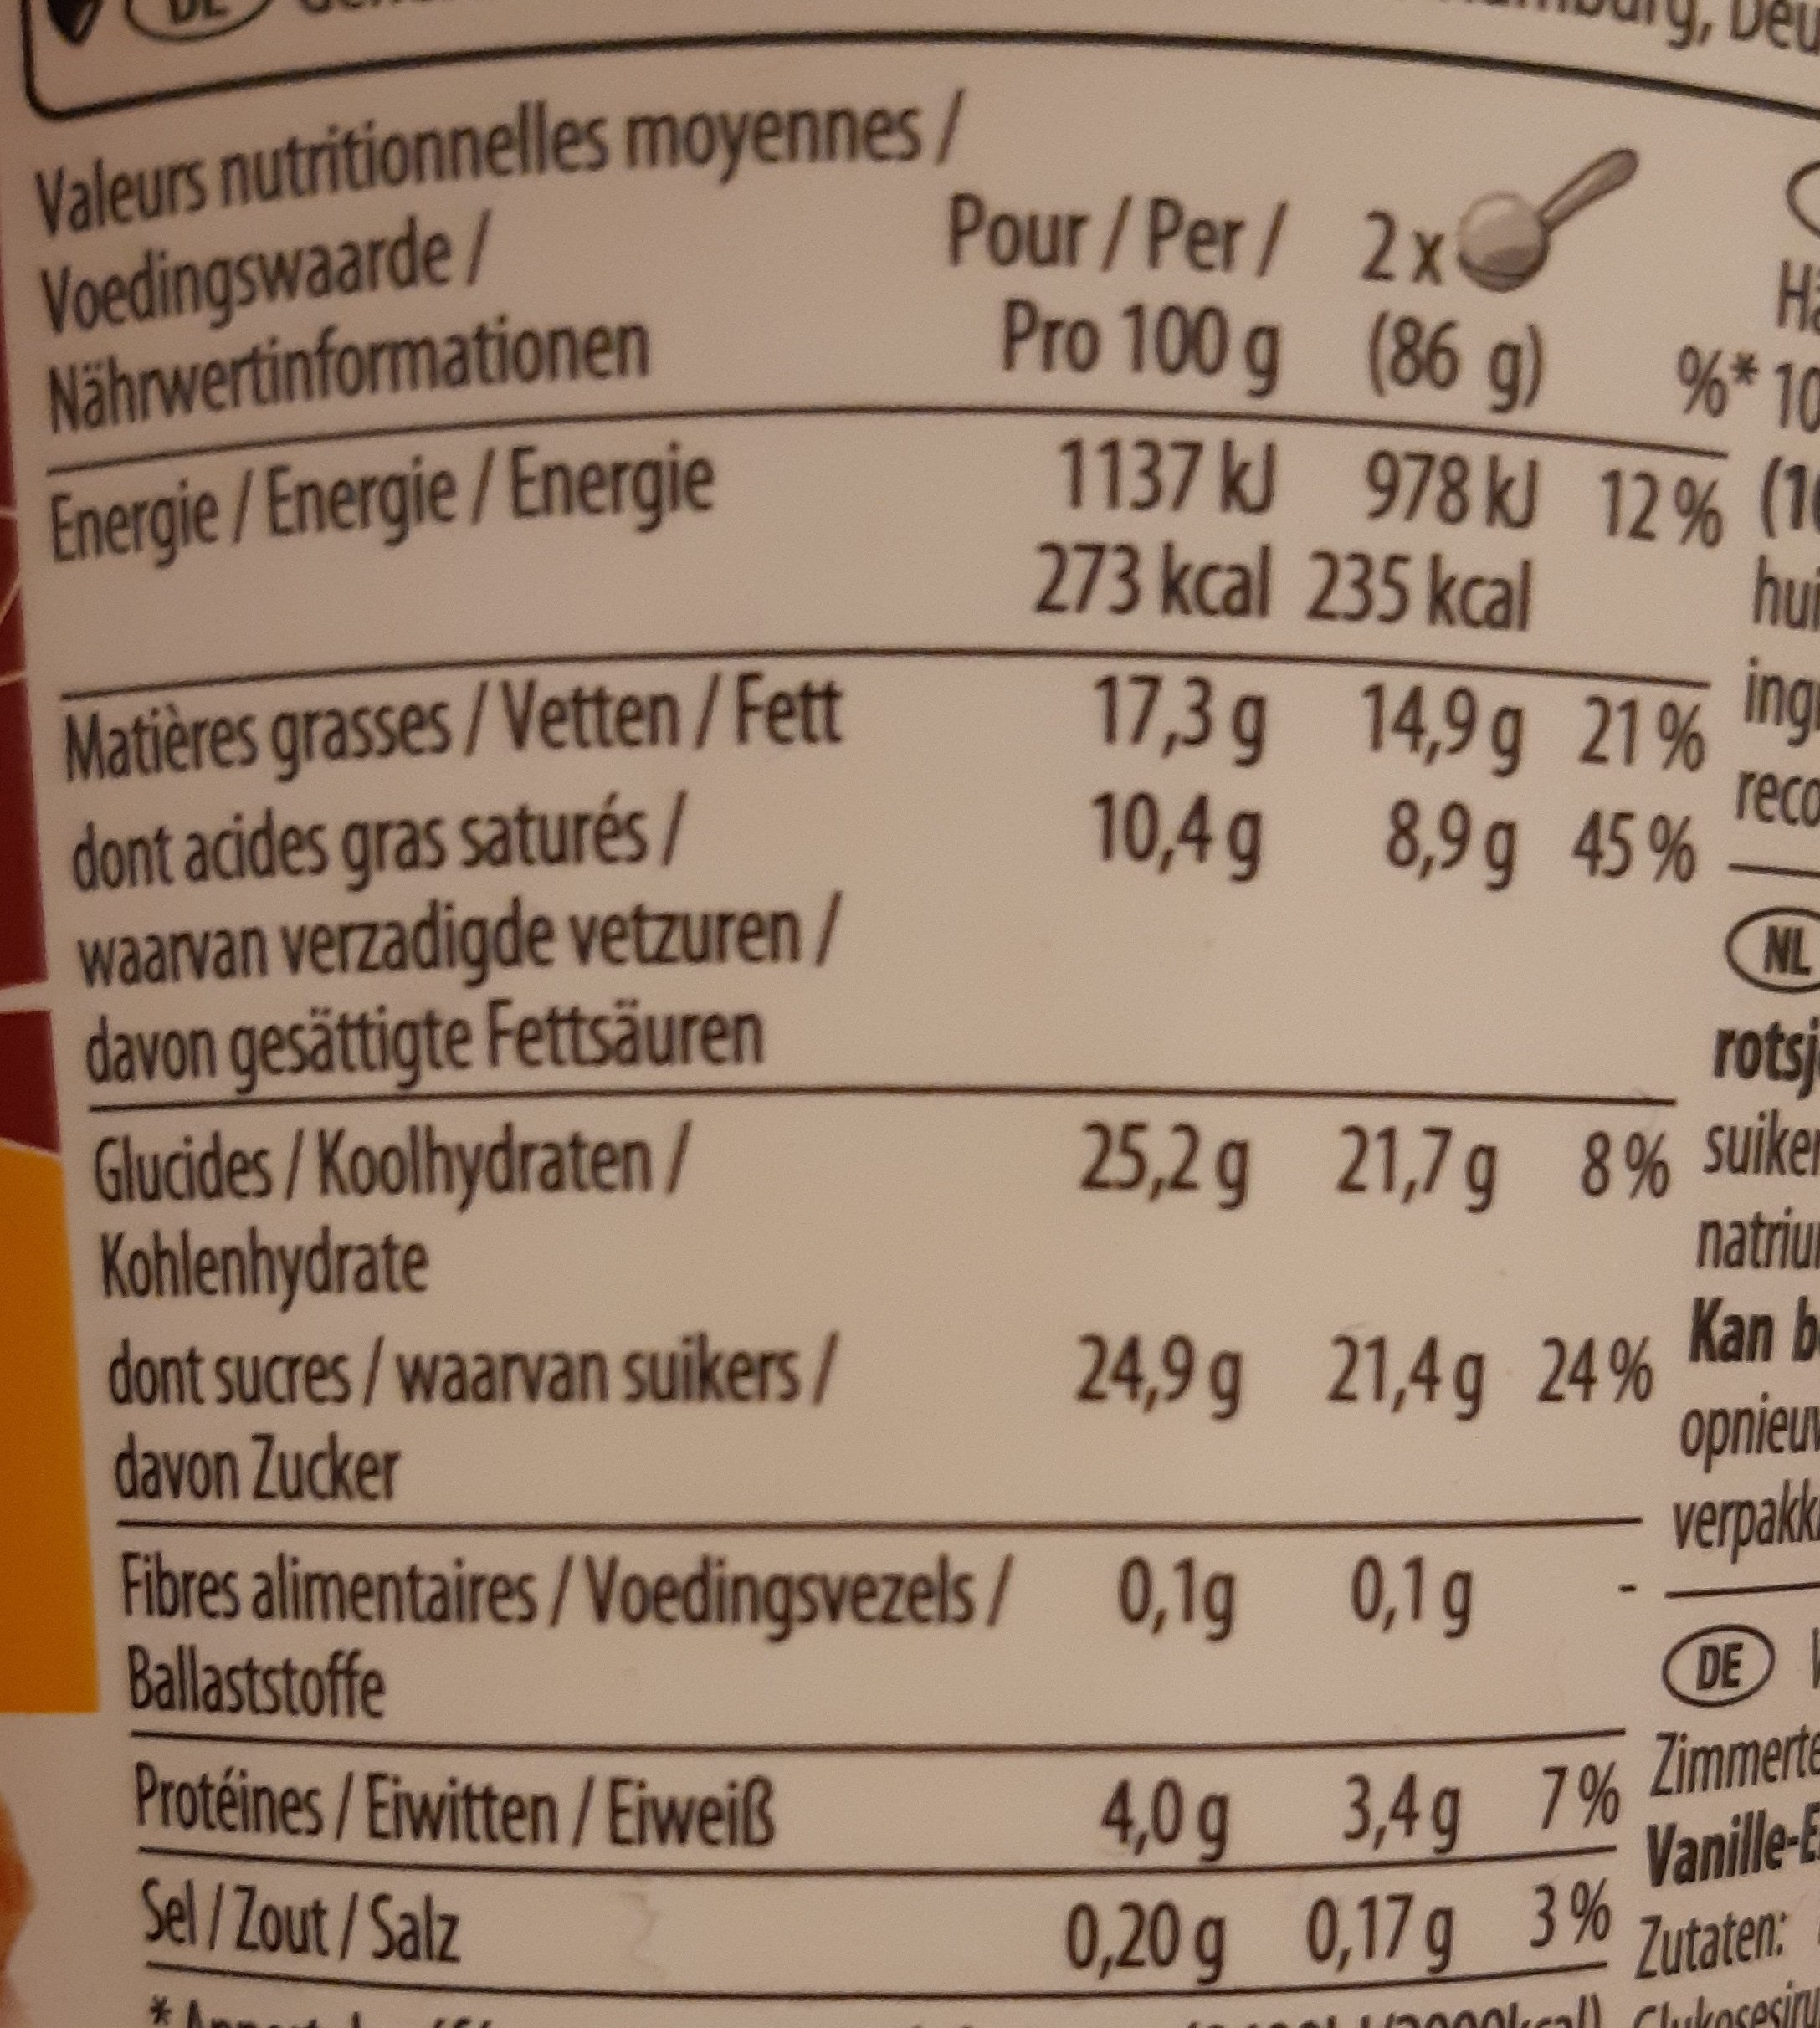 Vanillas macadamia nut brittle - Tableau nutritionnel